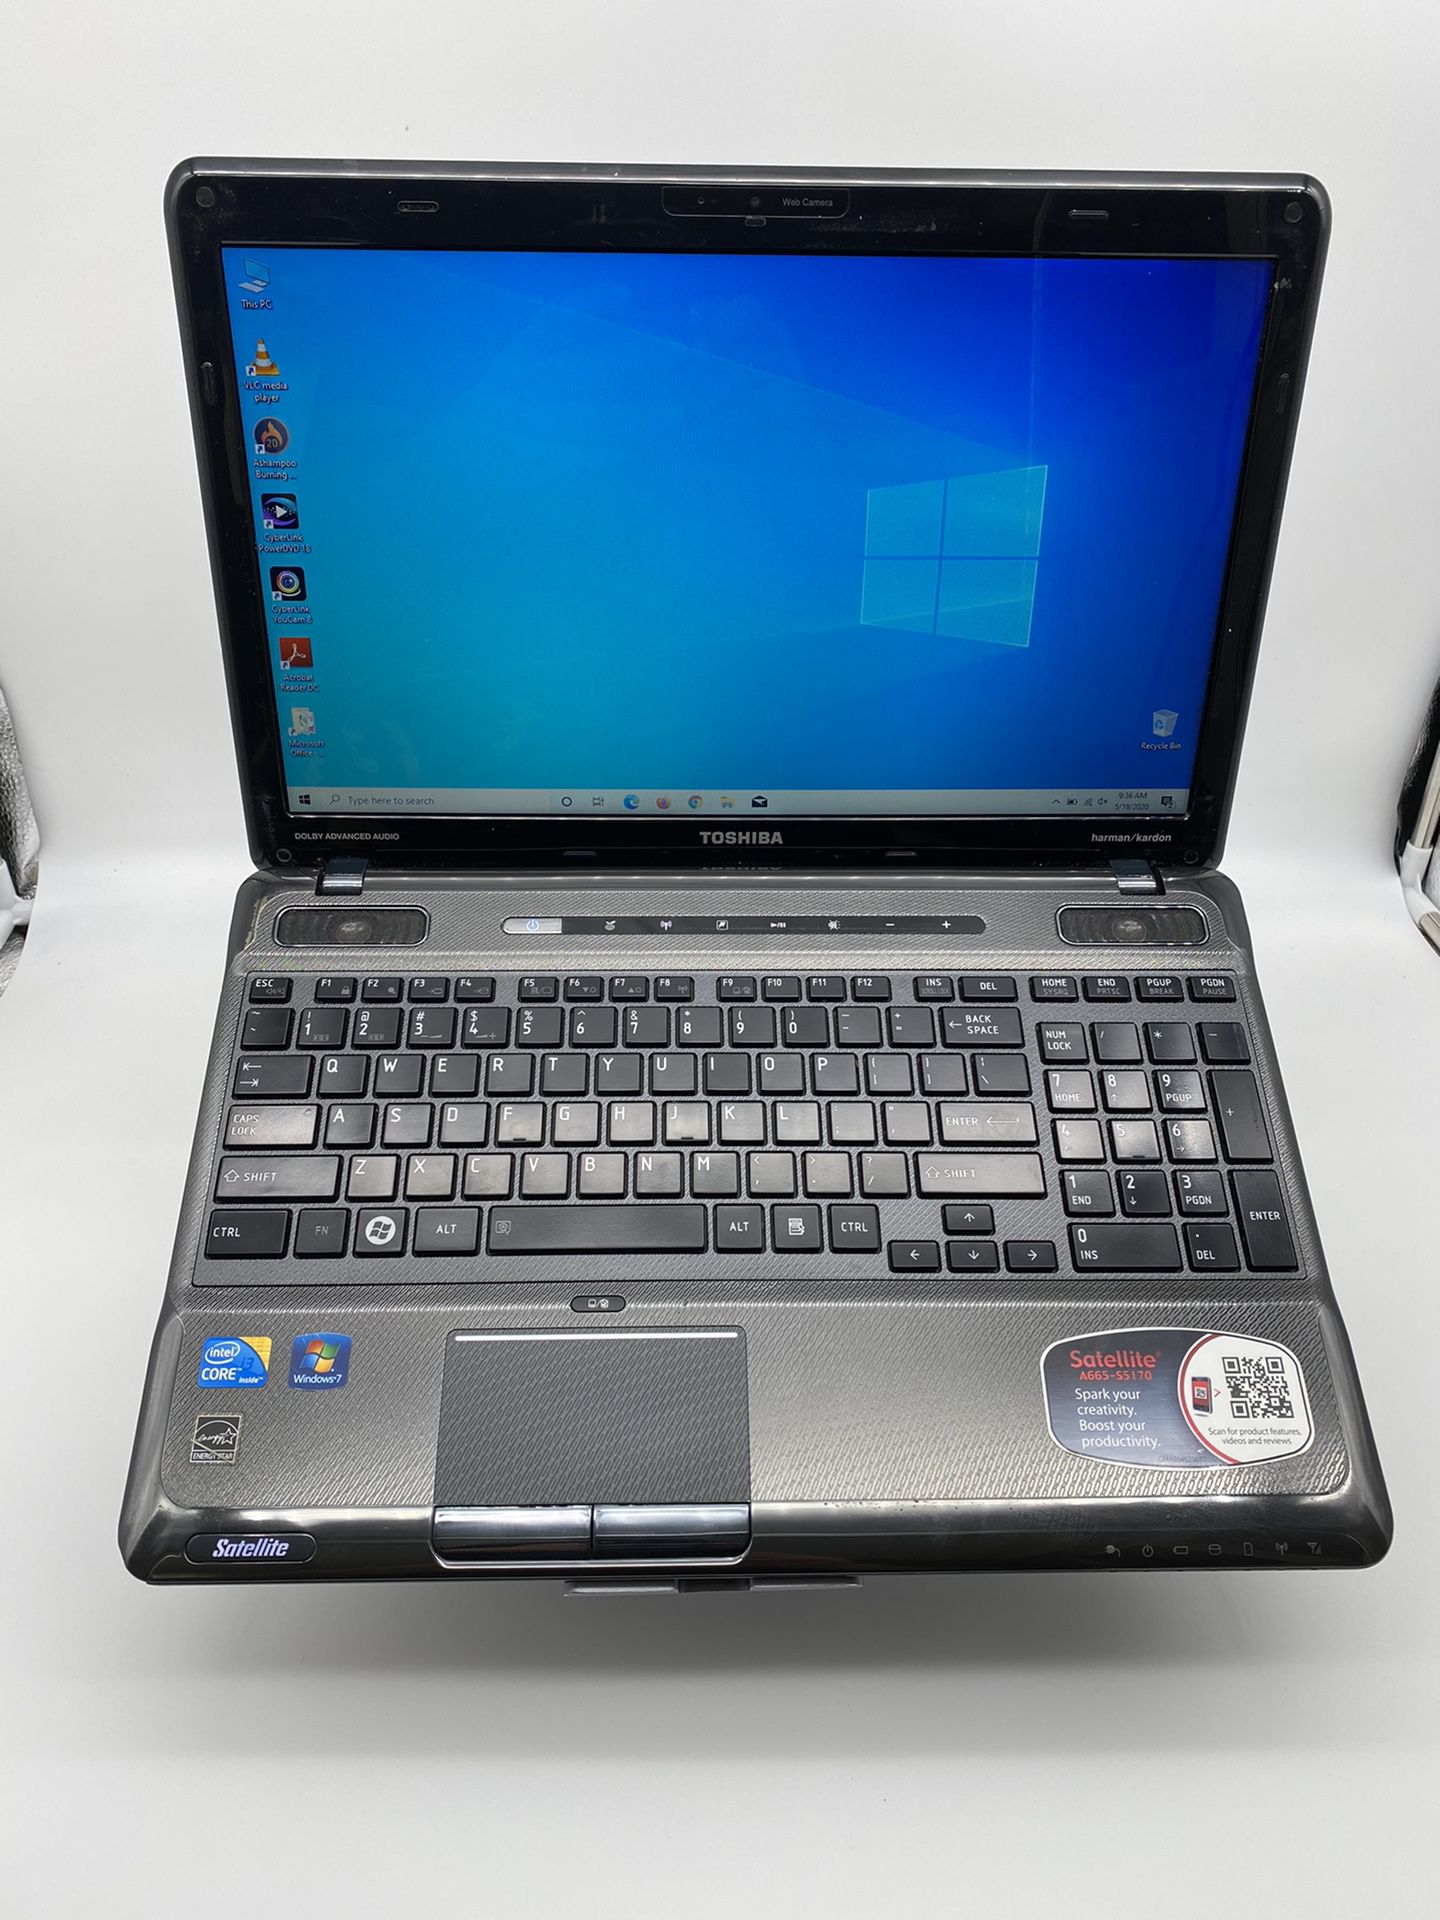 Toshiba a665 laptop